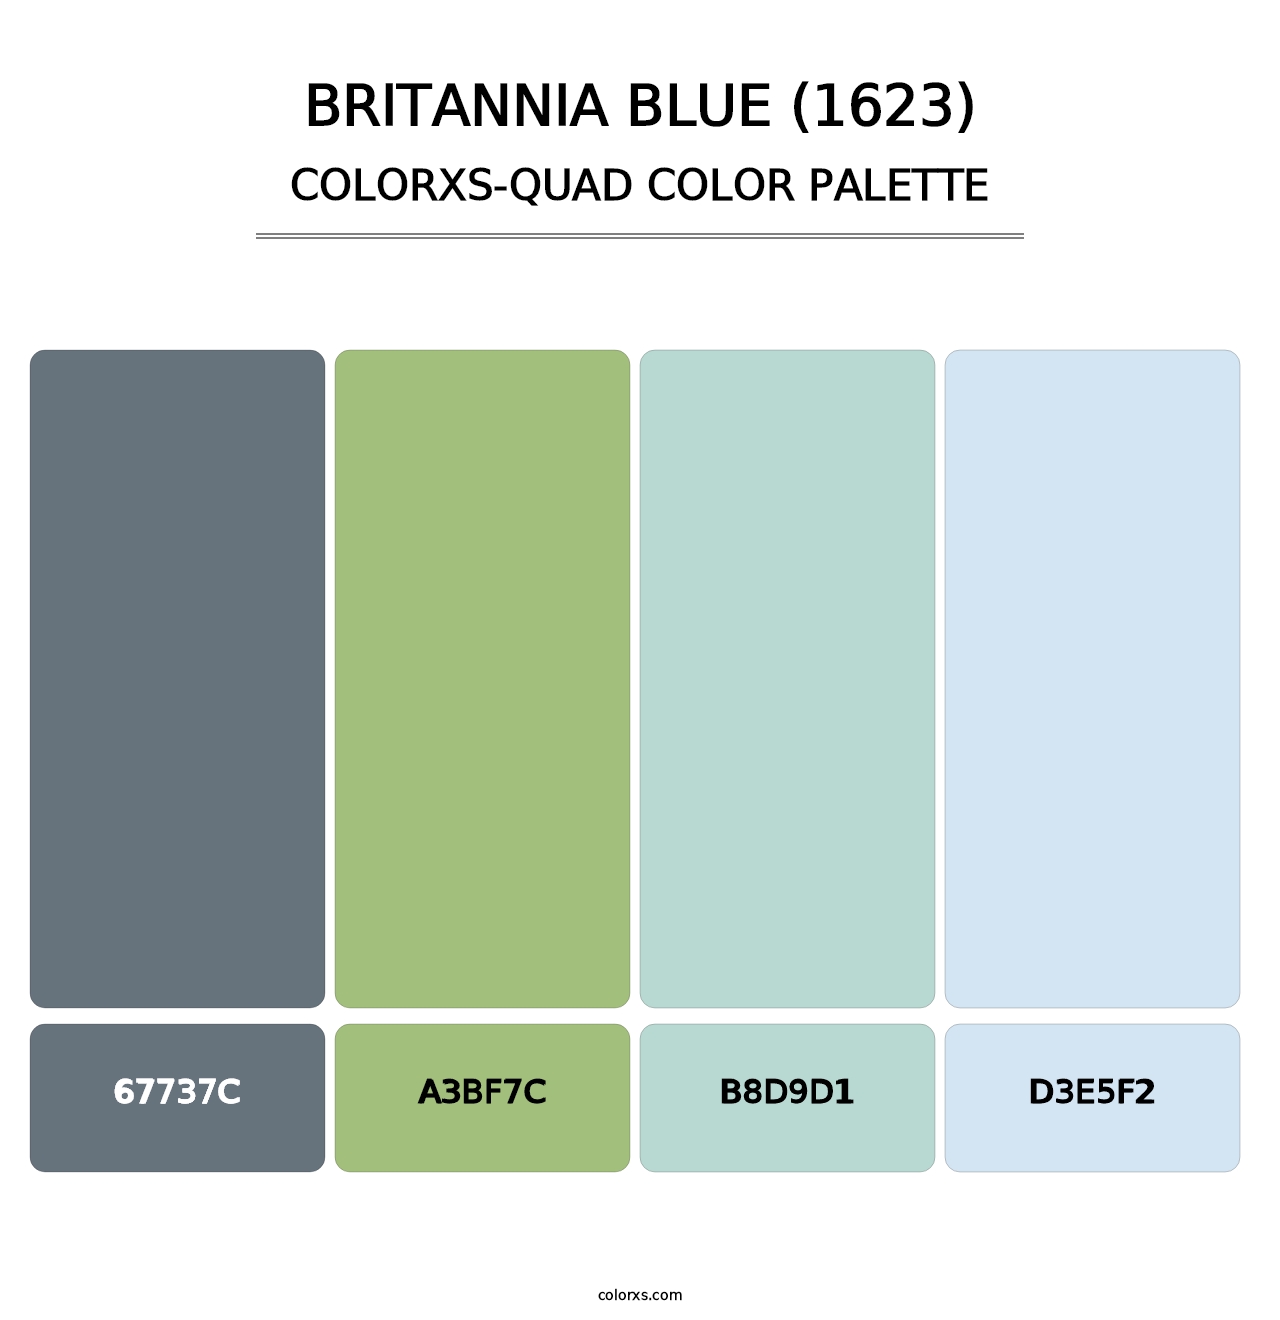 Britannia Blue (1623) - Colorxs Quad Palette